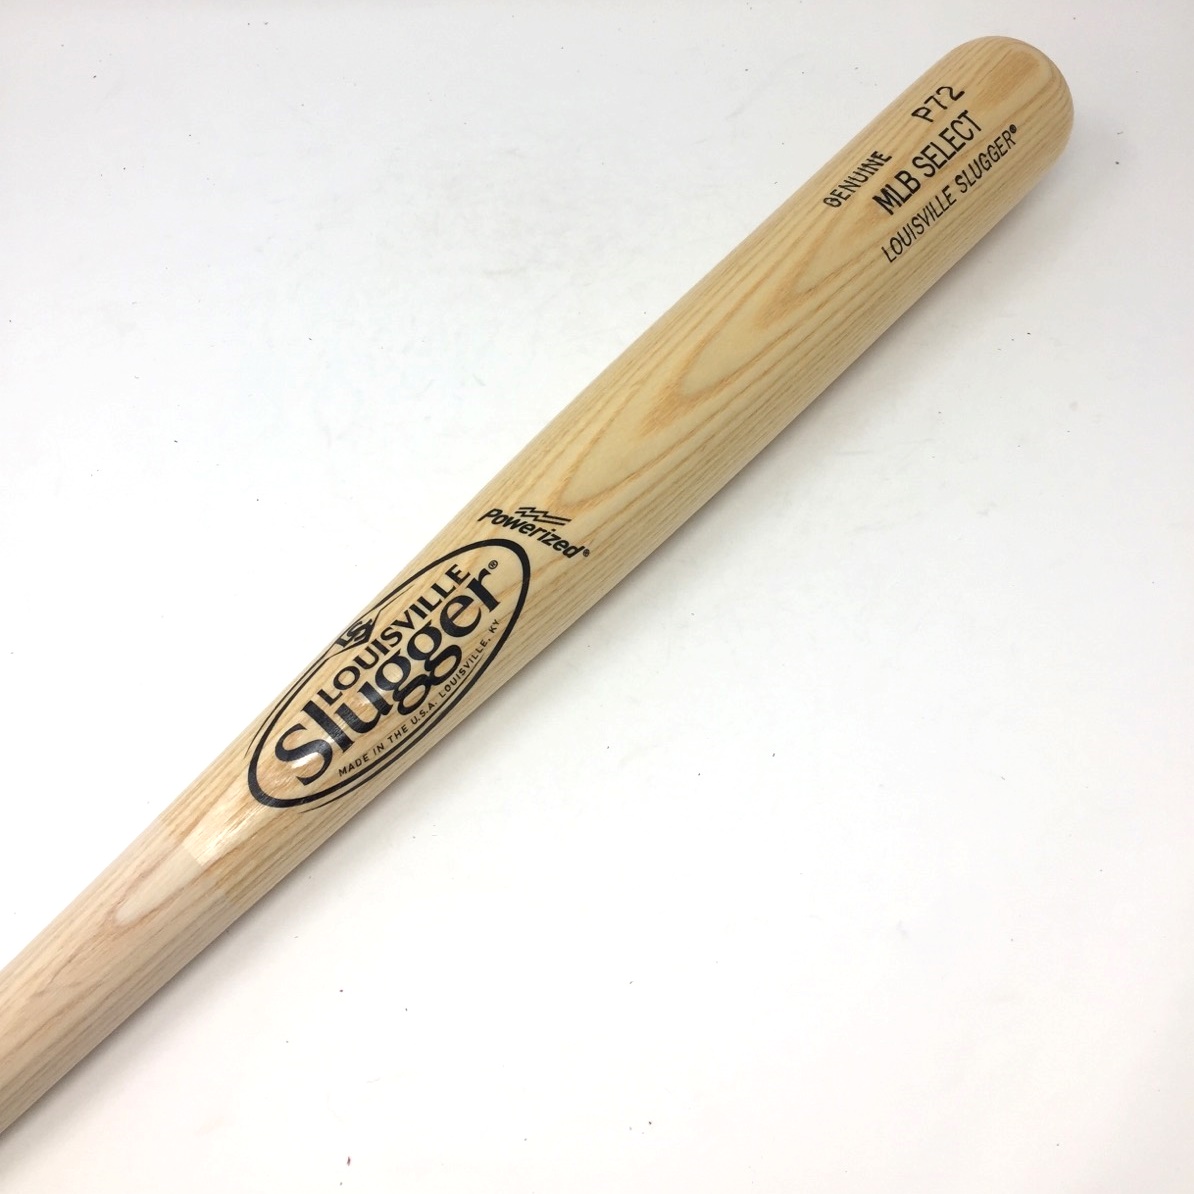 louisville-slugger-p72-mlb-select-ash-wood-baseball-bat-34-inch WBBP14P72NNA-34 Louisville  Louisville Slugger MLB Select Ash Wood Baseball Bat. P72 Turning Model. The